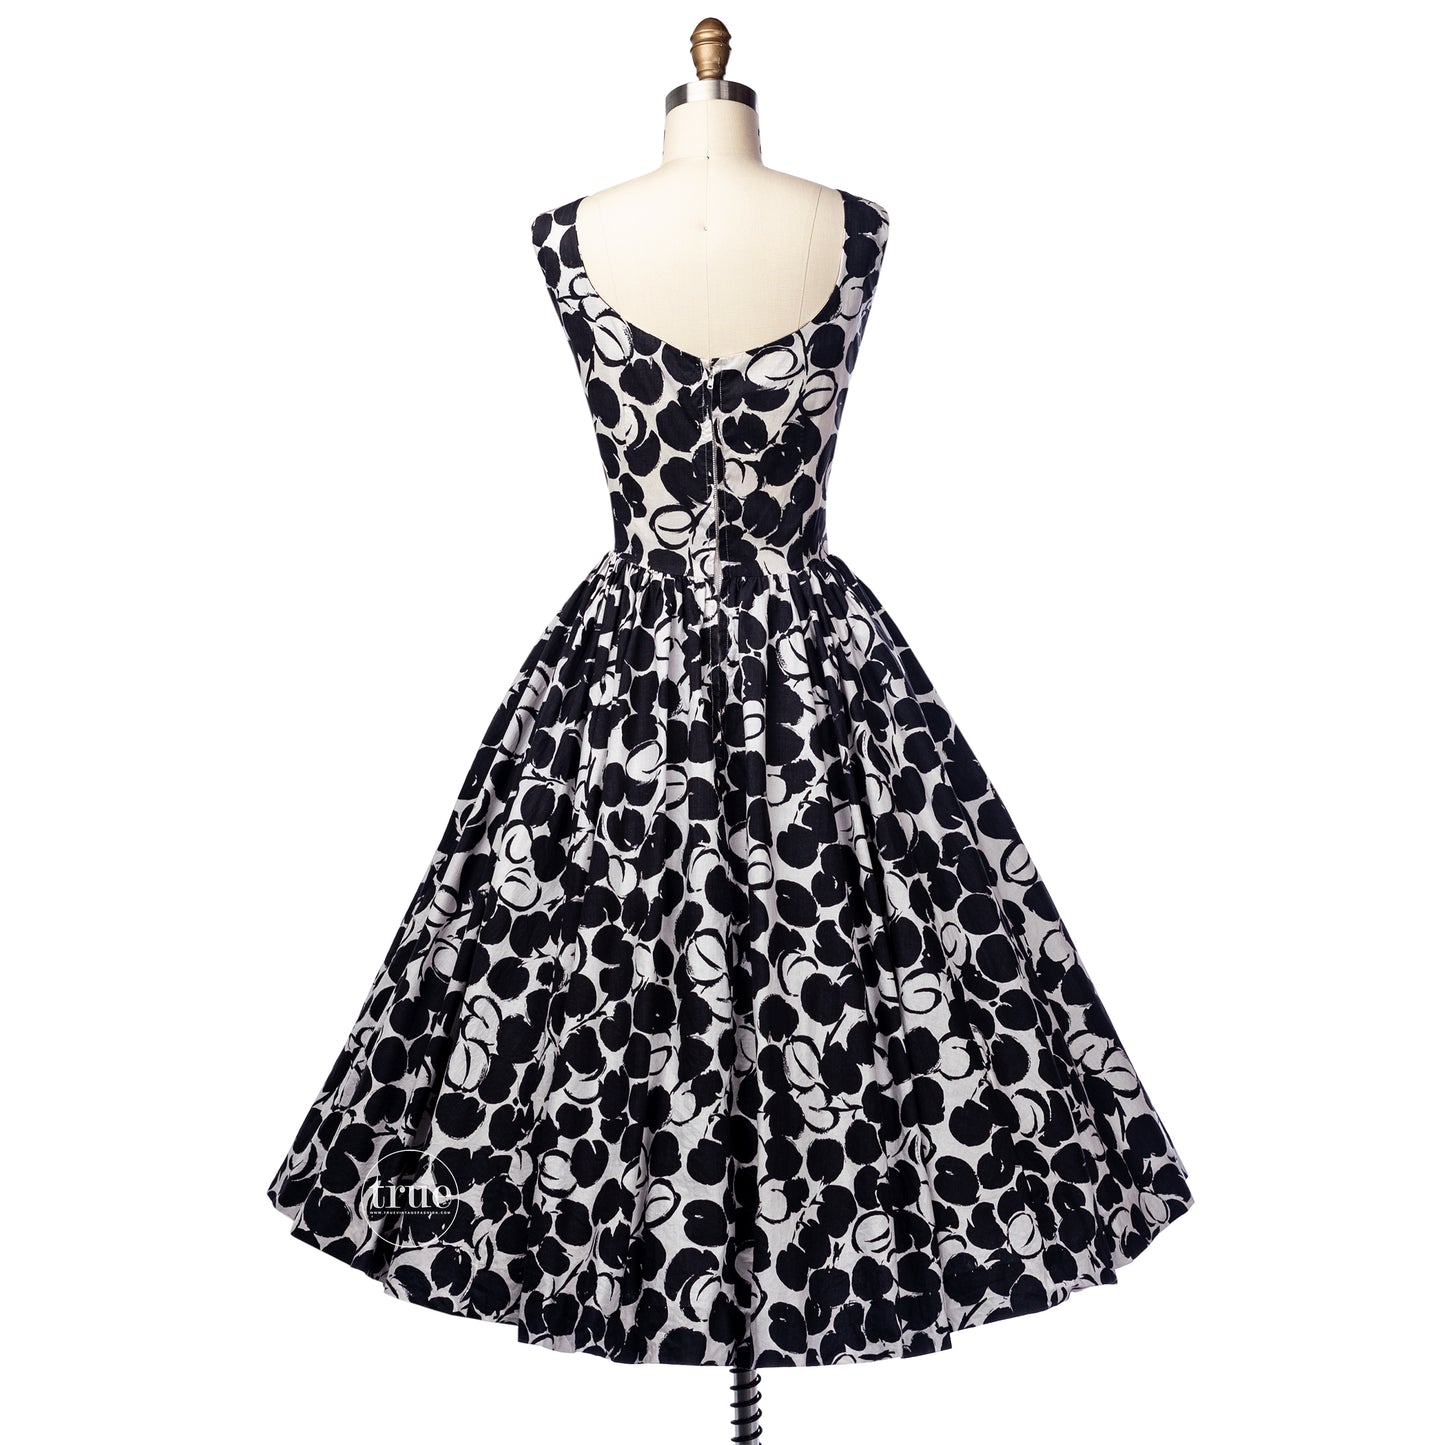 vintage 1950's dress ...fabulous Jerry Gilden B&W cherries print cotton full skirt dress